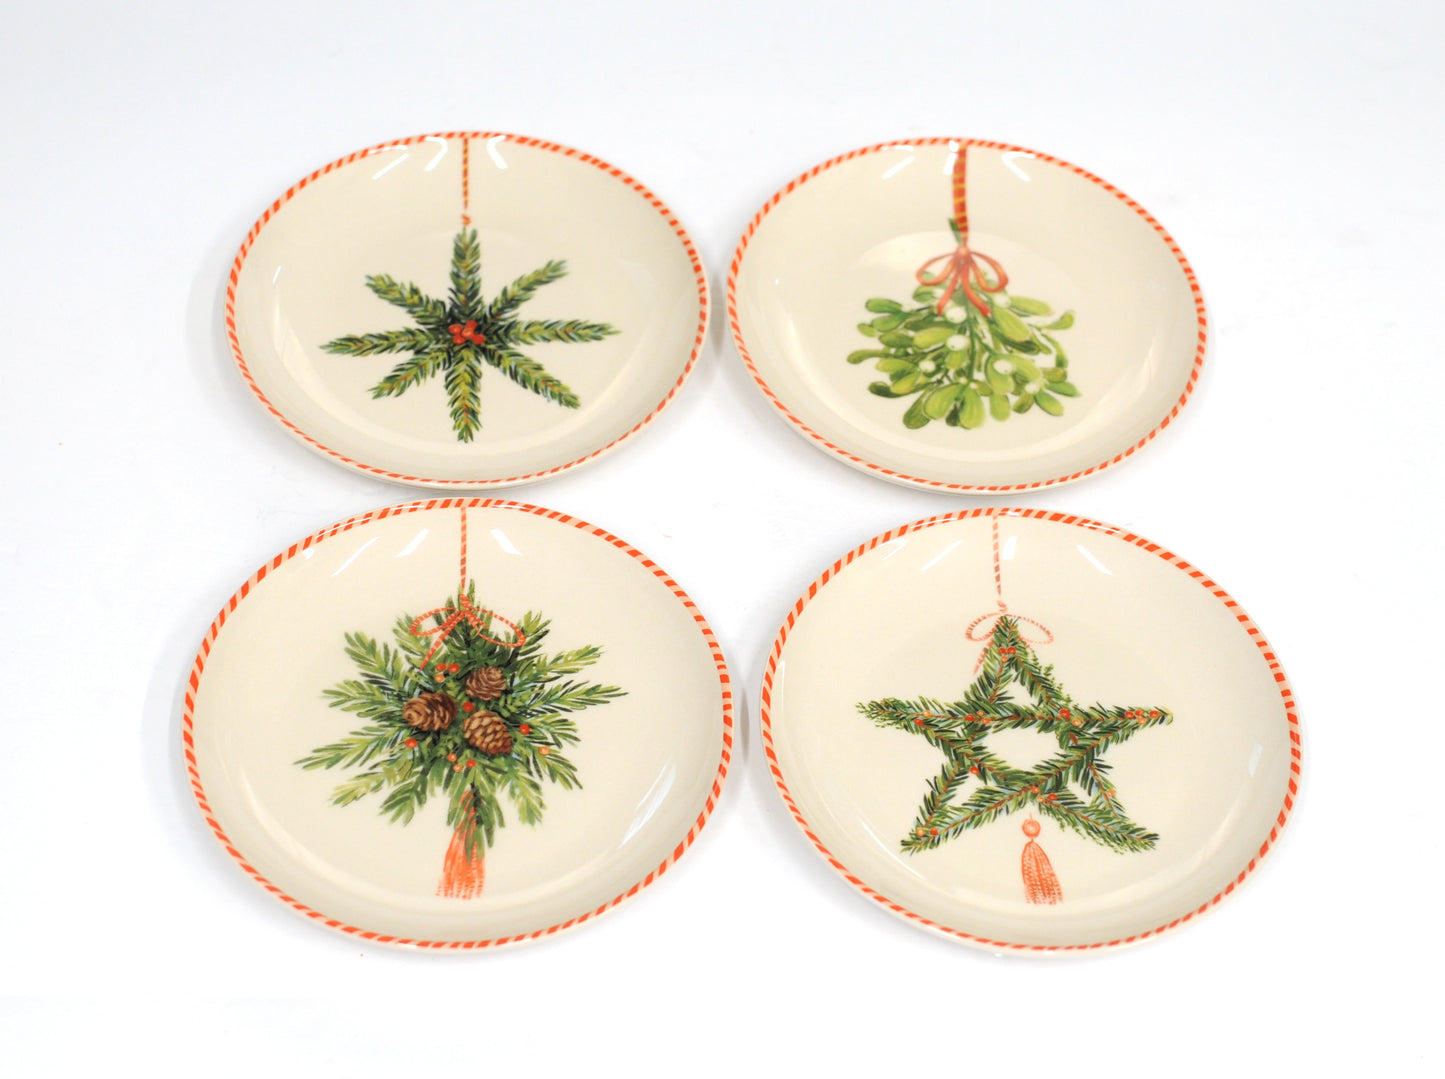 Pine Holiday Plates